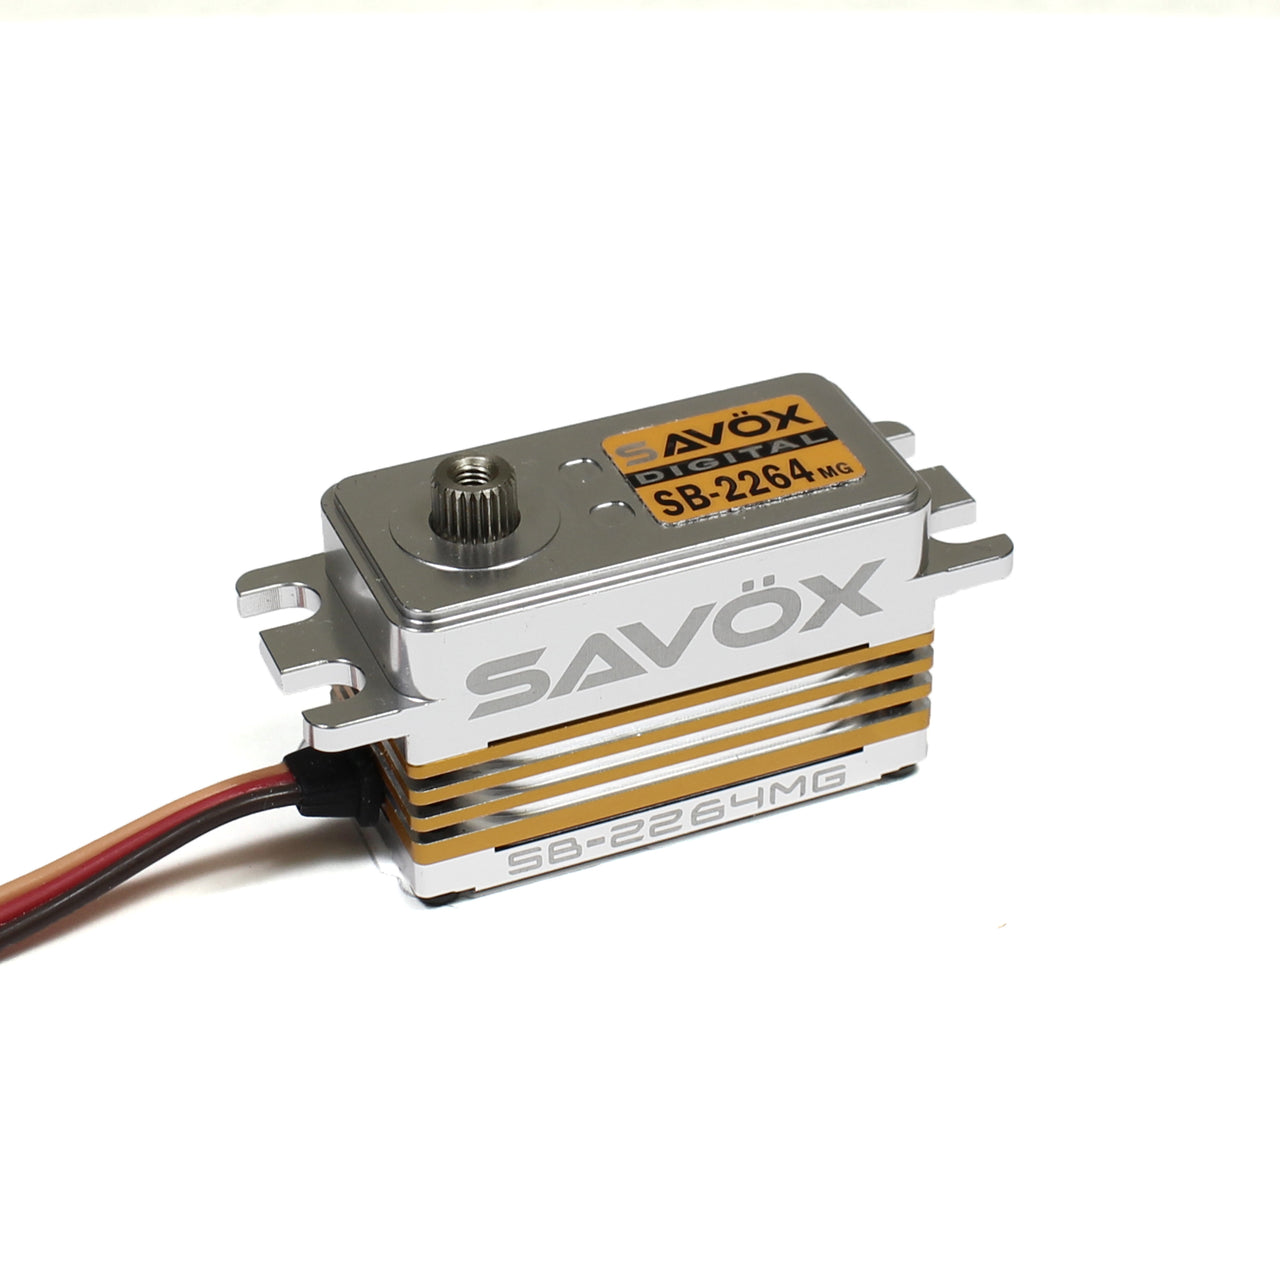 SAVSB2264MG Servo sans balais haute tension à profil bas 0,085 s / 208,3 oz à 7,4 V